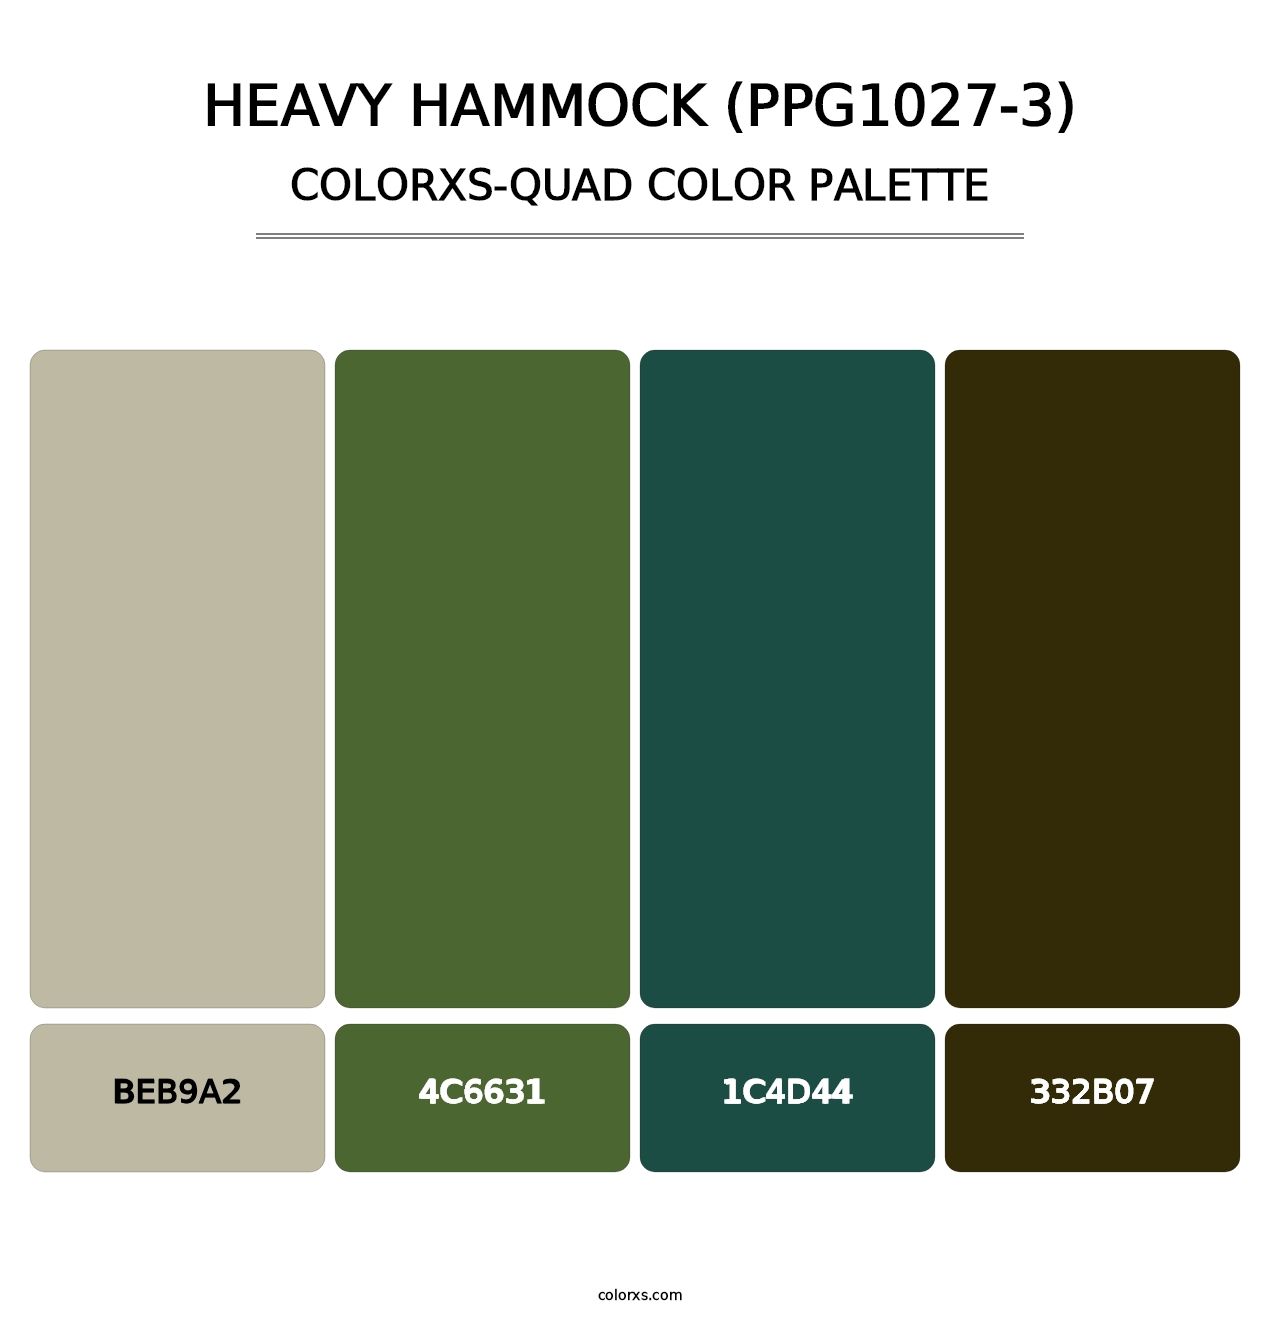 Heavy Hammock (PPG1027-3) - Colorxs Quad Palette